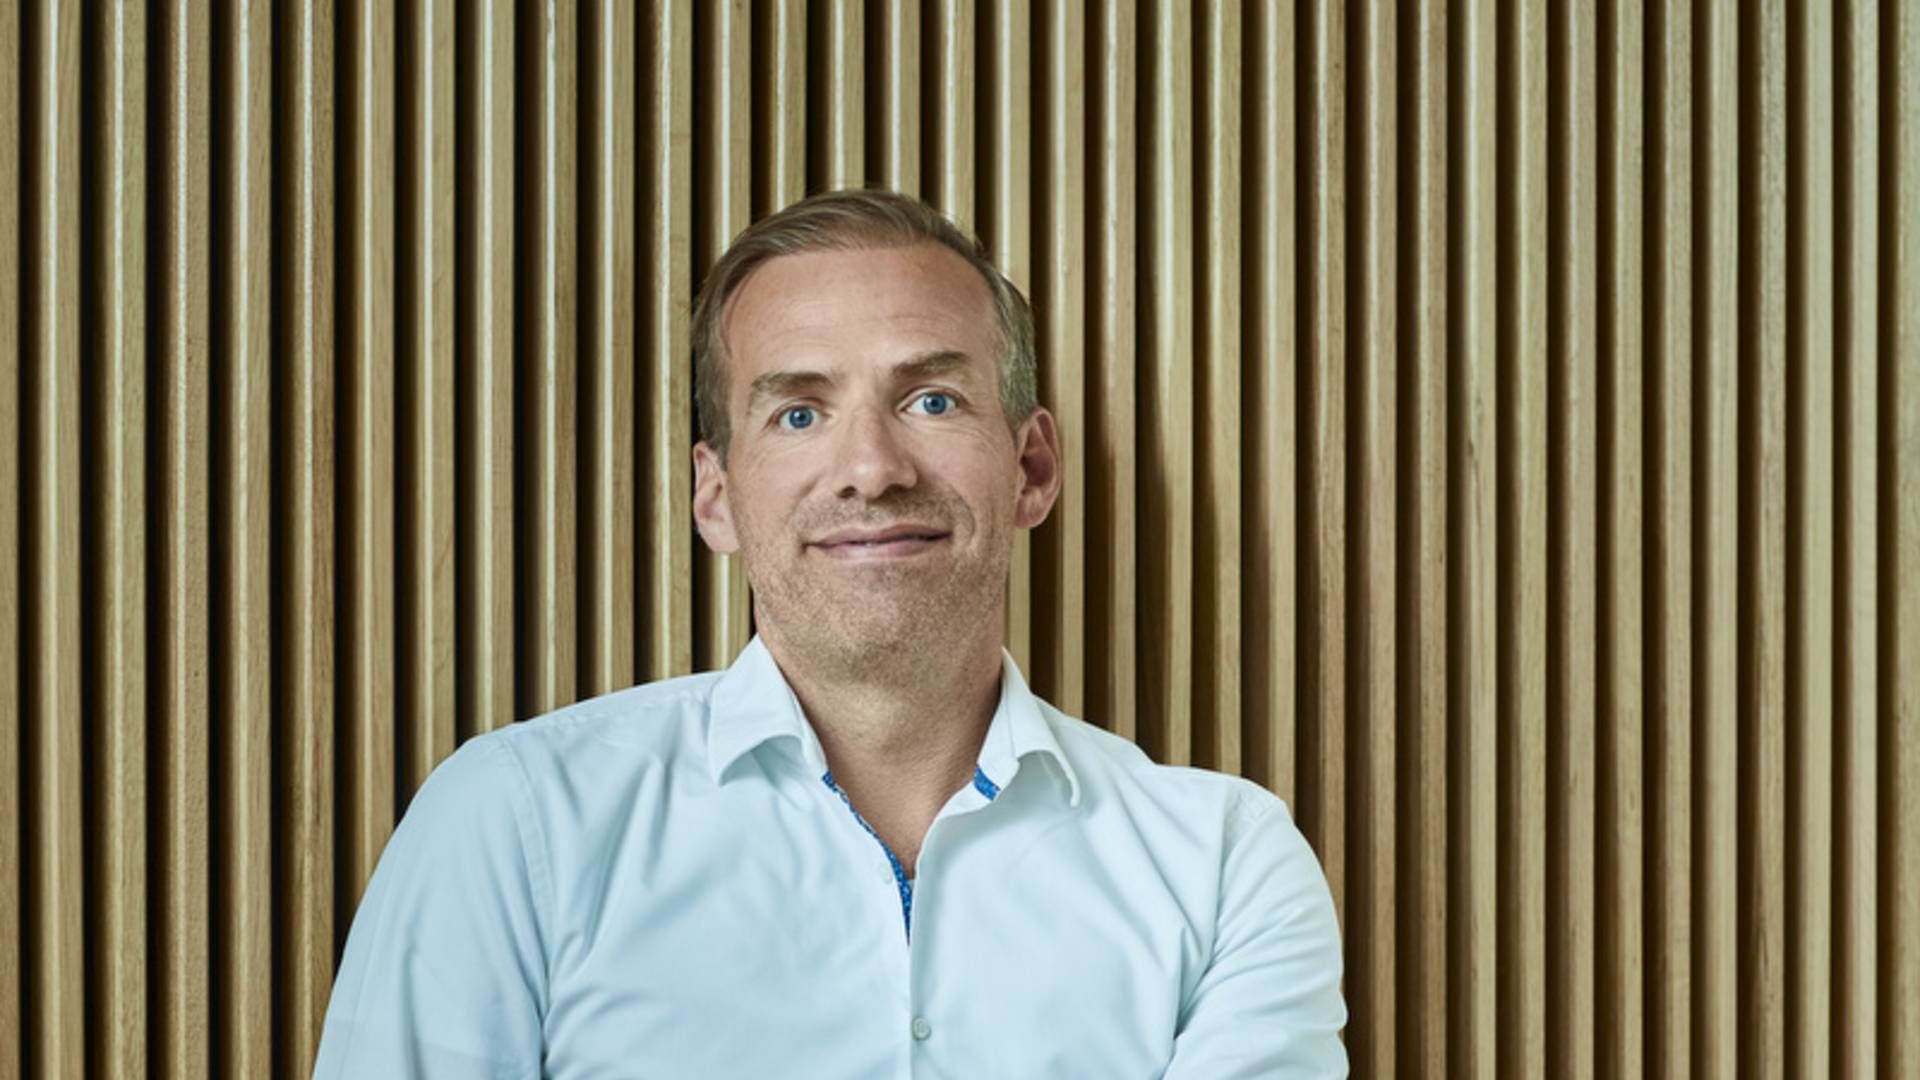 Direktør for Greenmobility, Thomas Heltborg Juul, beskriver hans første tid som direktør som udfordrende - men han kan godt lide en udfordring. | Foto: JASPER CARLBERG